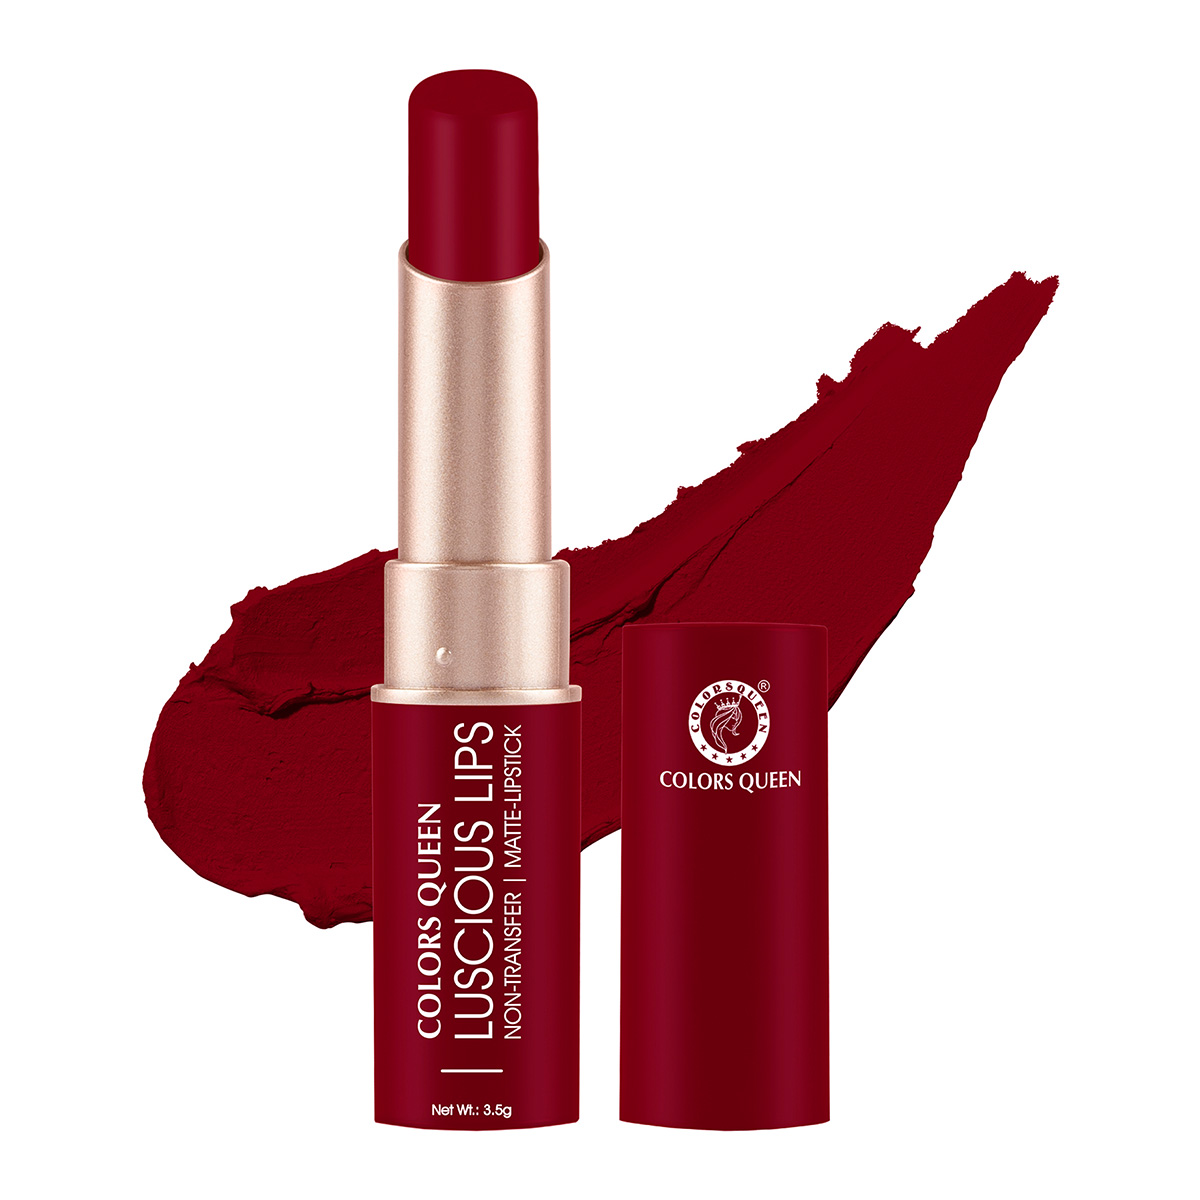 Colors Queen Luscious Lips Non Transfer Matte Lipstick - Royal Rust Maroon, 3.5gm